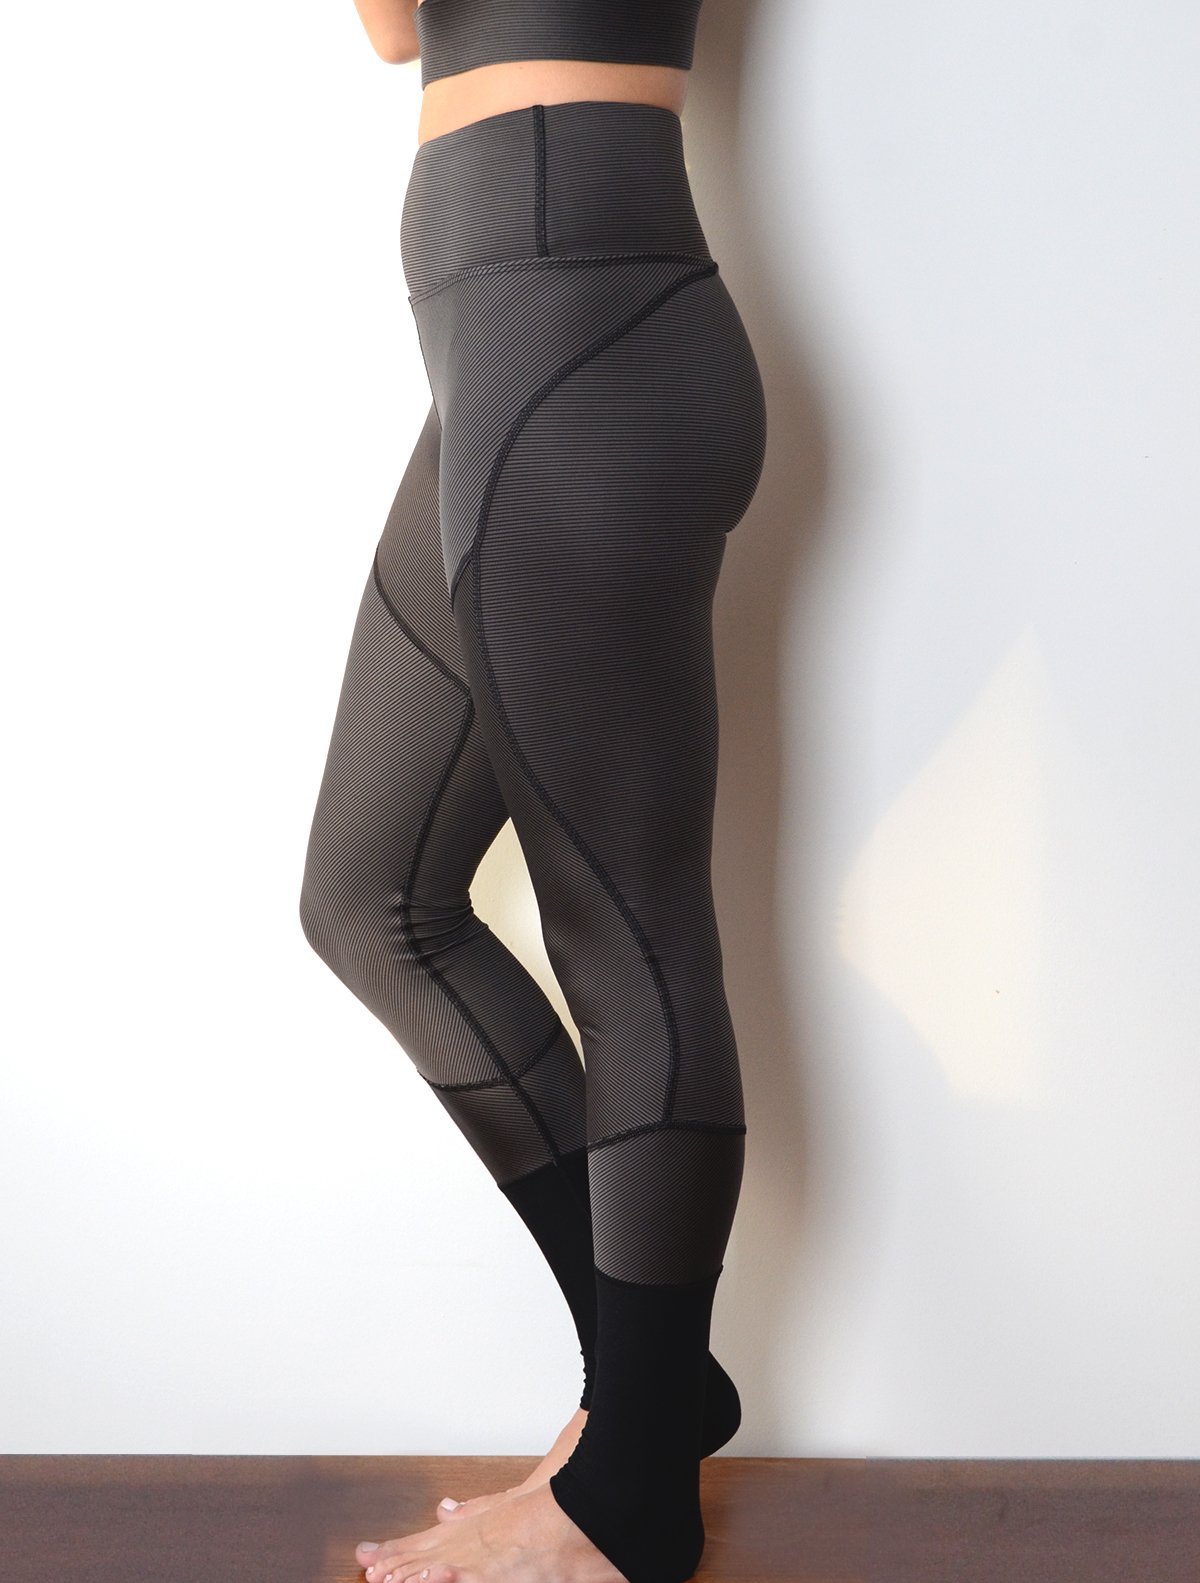 Side view of model wearing simulacra's women's full-length color block leggings in the grey/black stripe